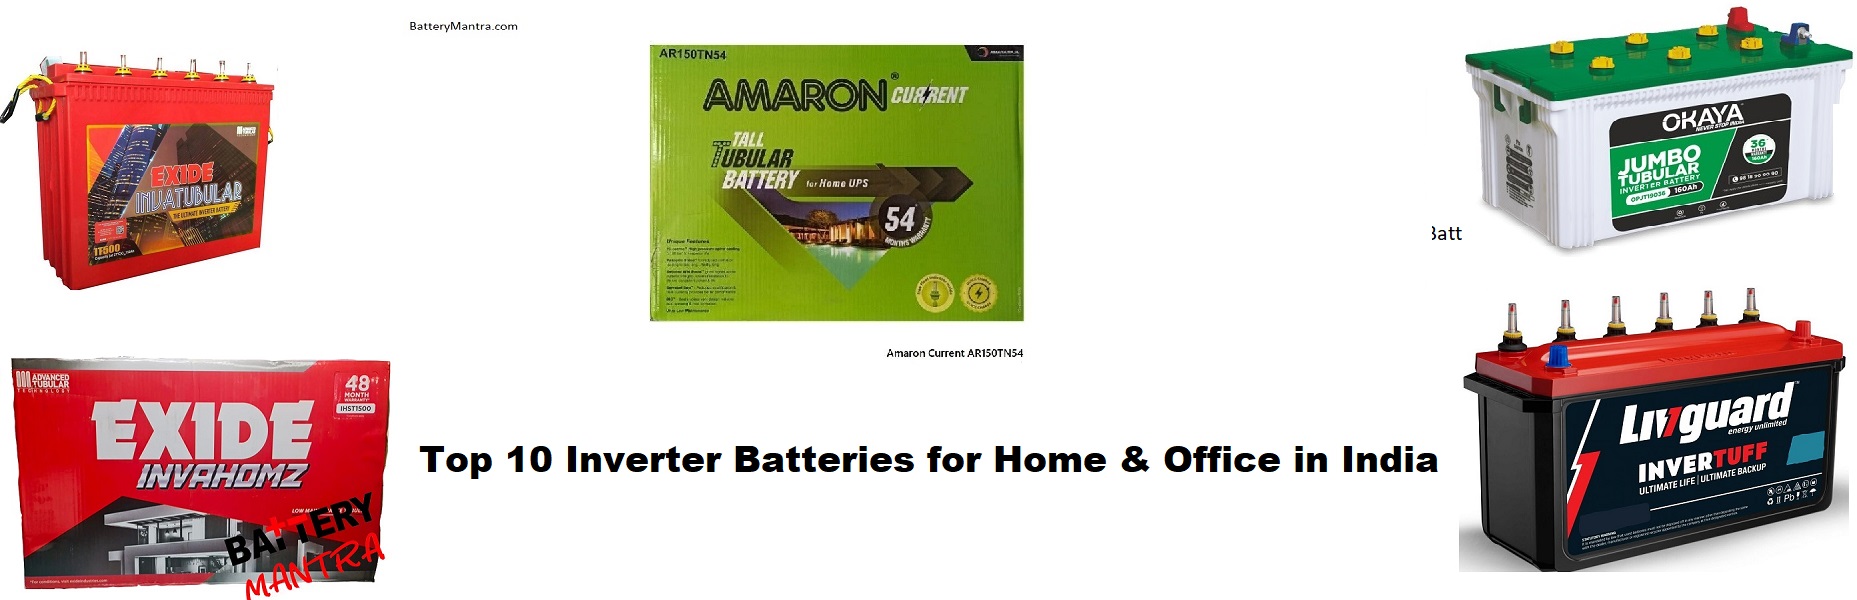 Top 10 Inverter Batteries in India BatteryMantra.com